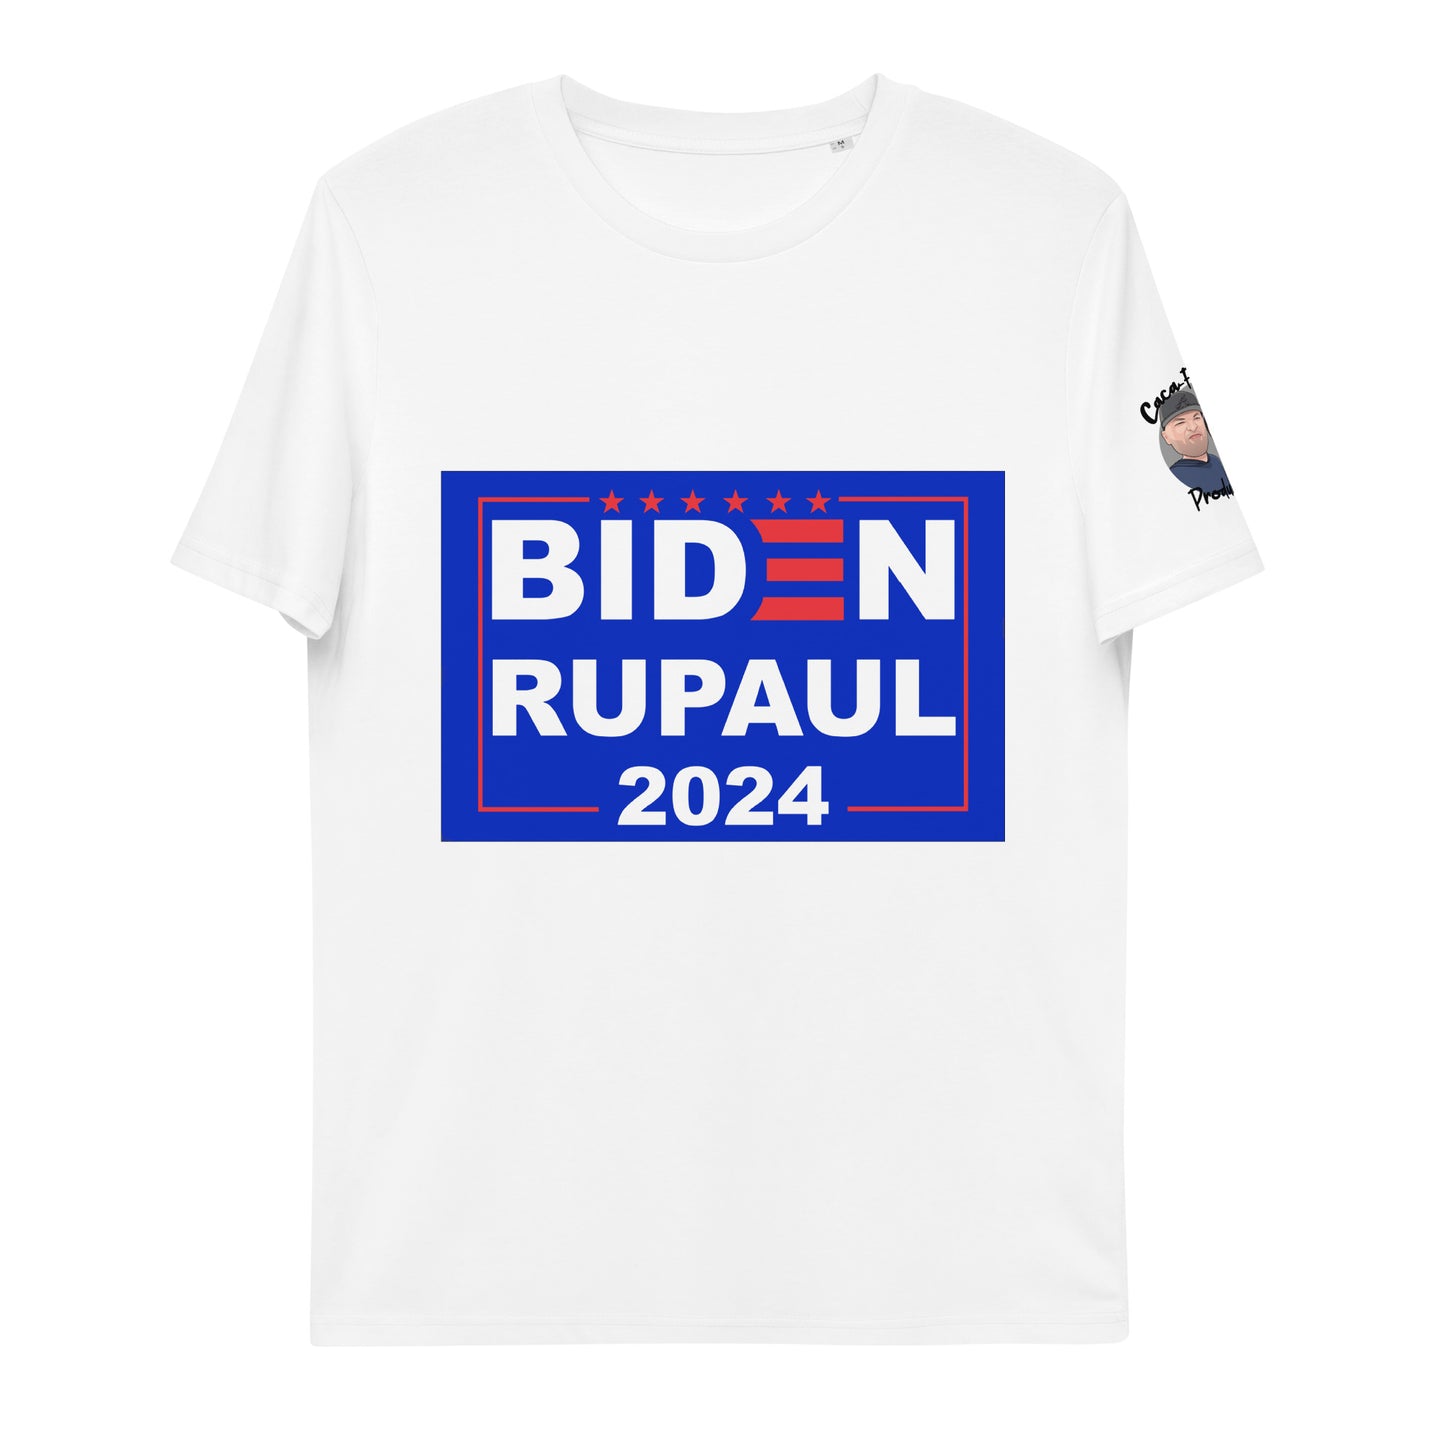 *Biden Rupaul* (Unisex organic cotton t-shirt